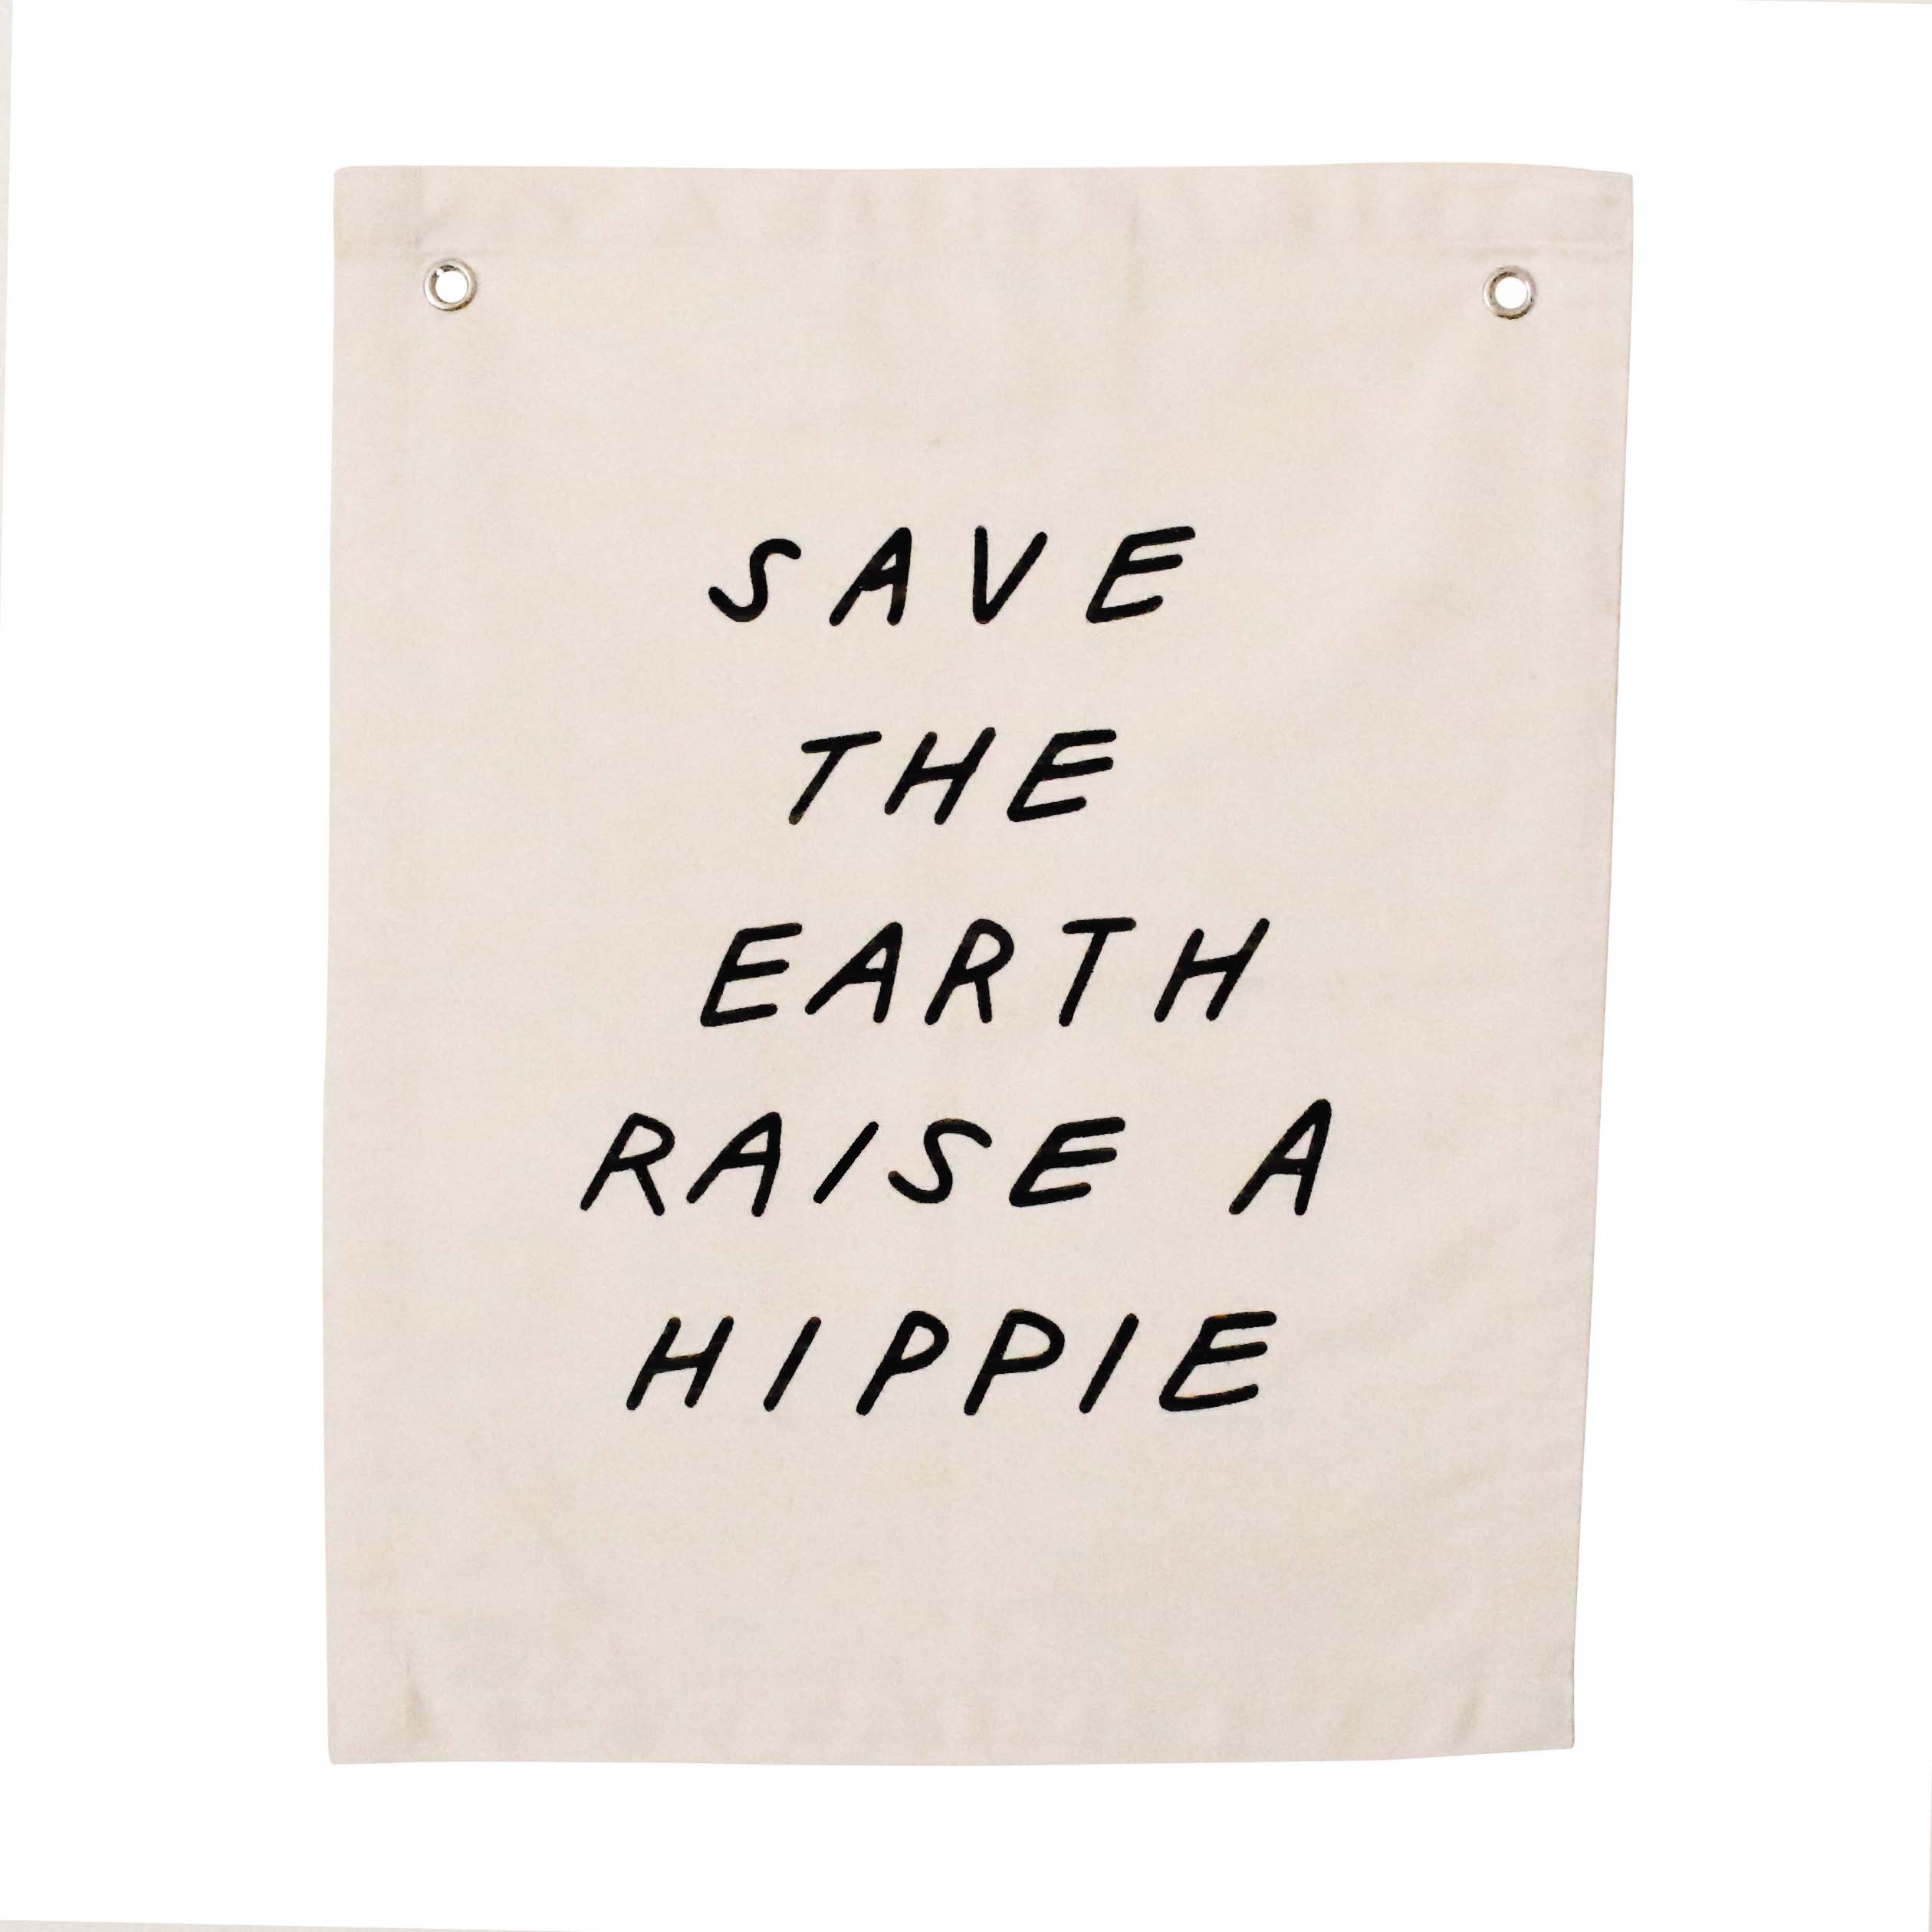 raise a hippie banner